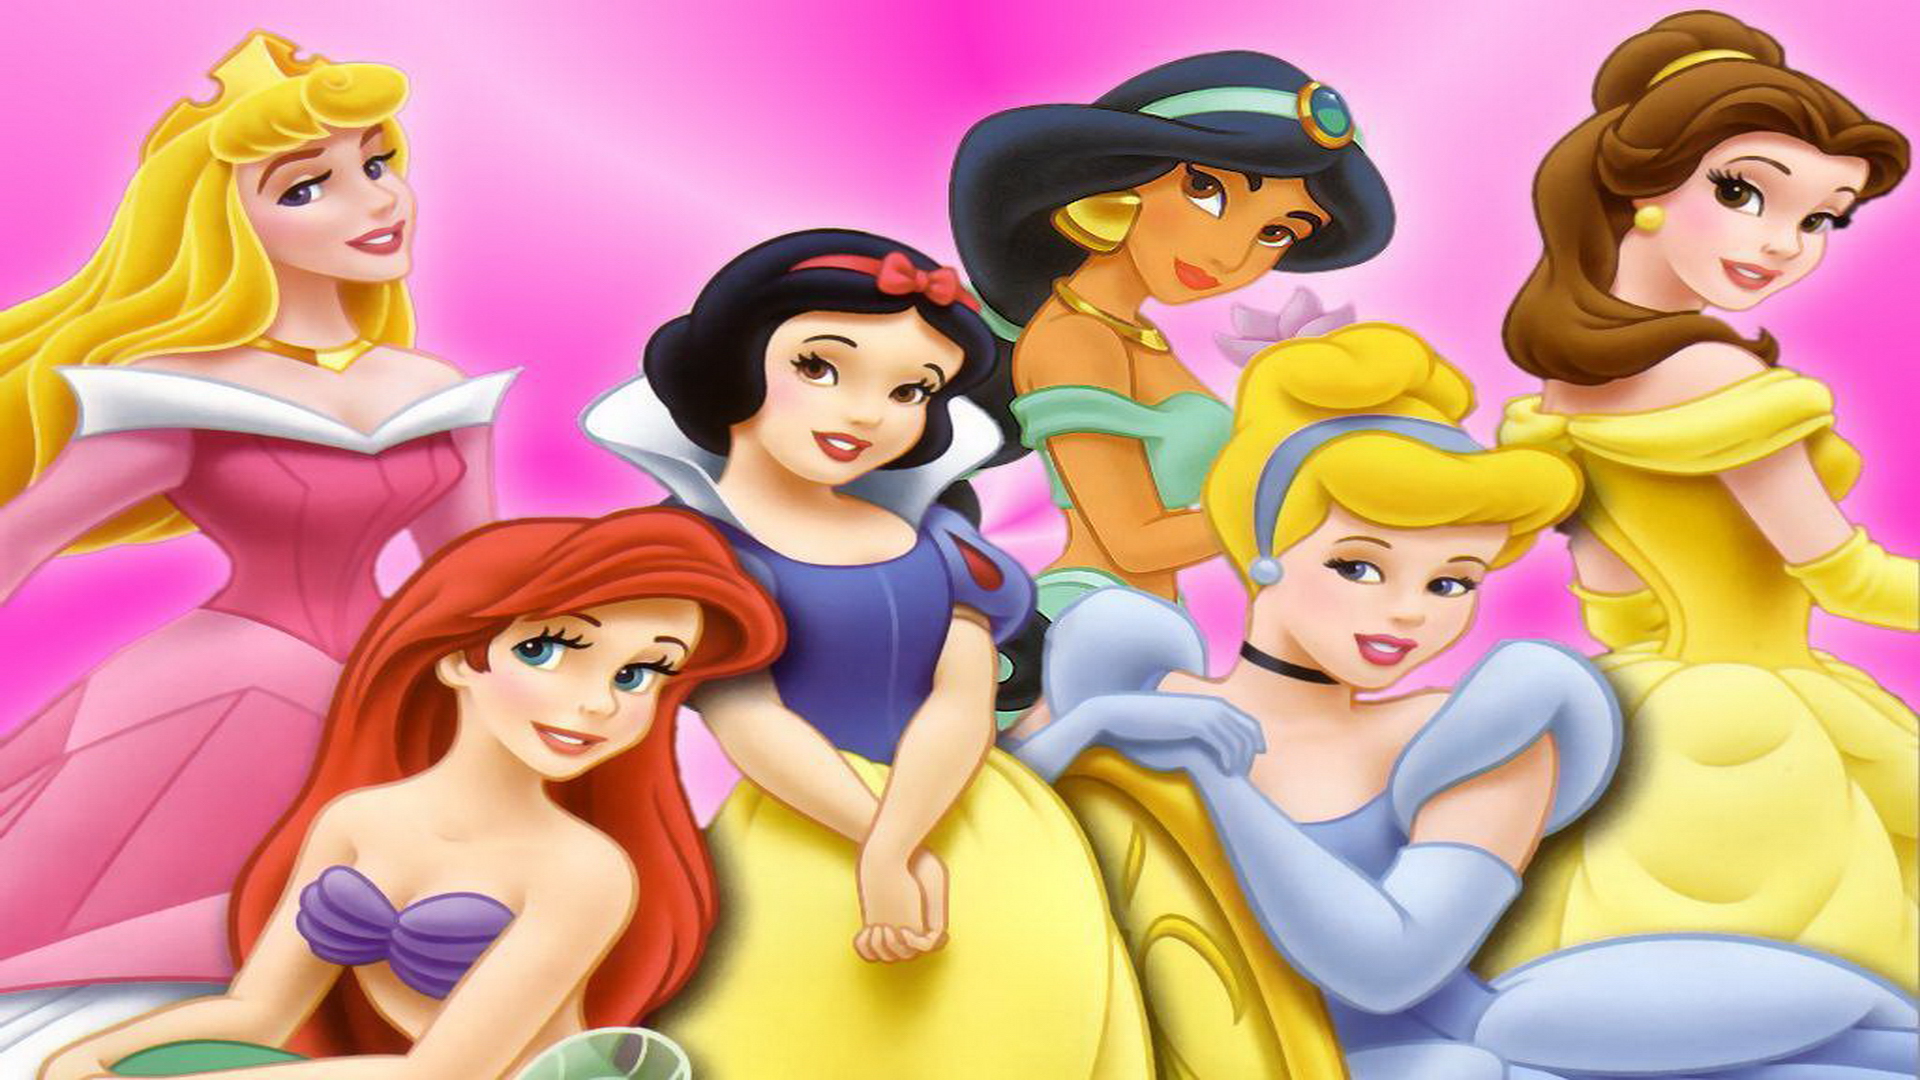 disney princess, disney, cinderella, movie, ariel (the little mermaid), aurora (sleeping beauty), belle (beauty and the beast), black hair, blonde, brown hair, princess jasmine, red hair, snow white